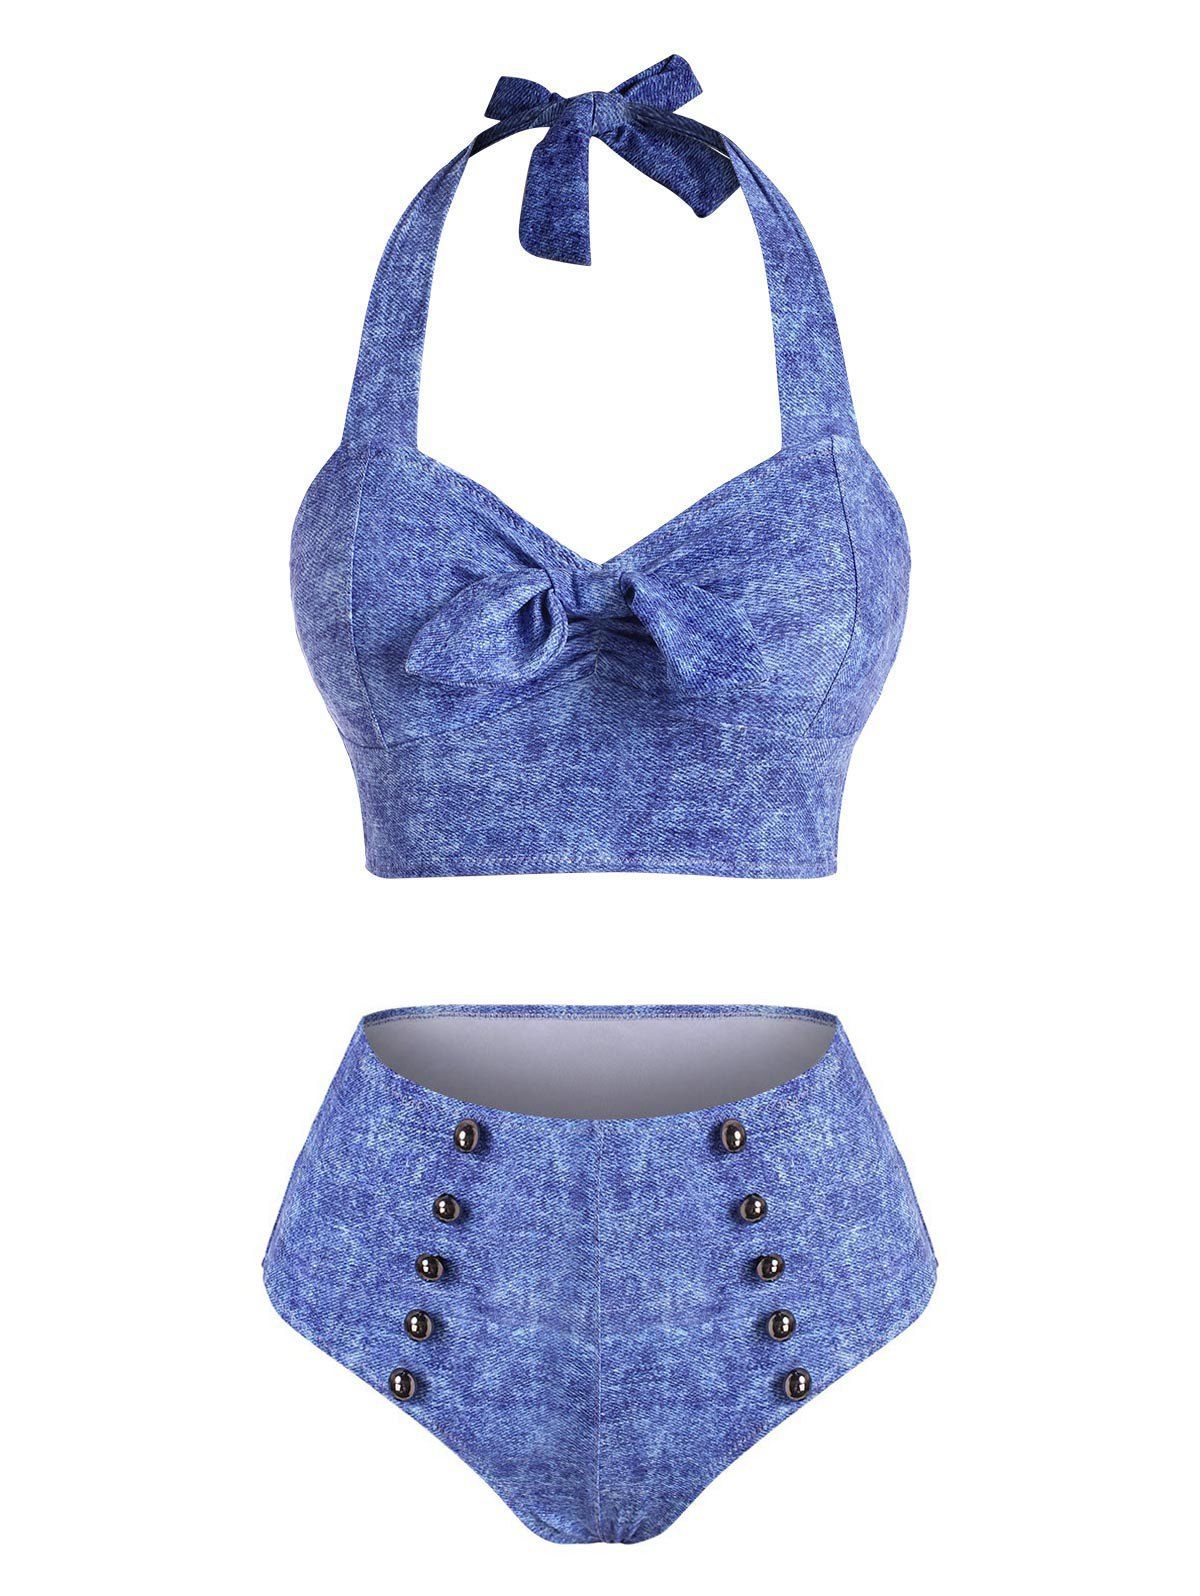 Matching Swimsuit Knotted Sailor Style Denim Printed Halter Bikini Swimwear - LIGHT BLUE XXL